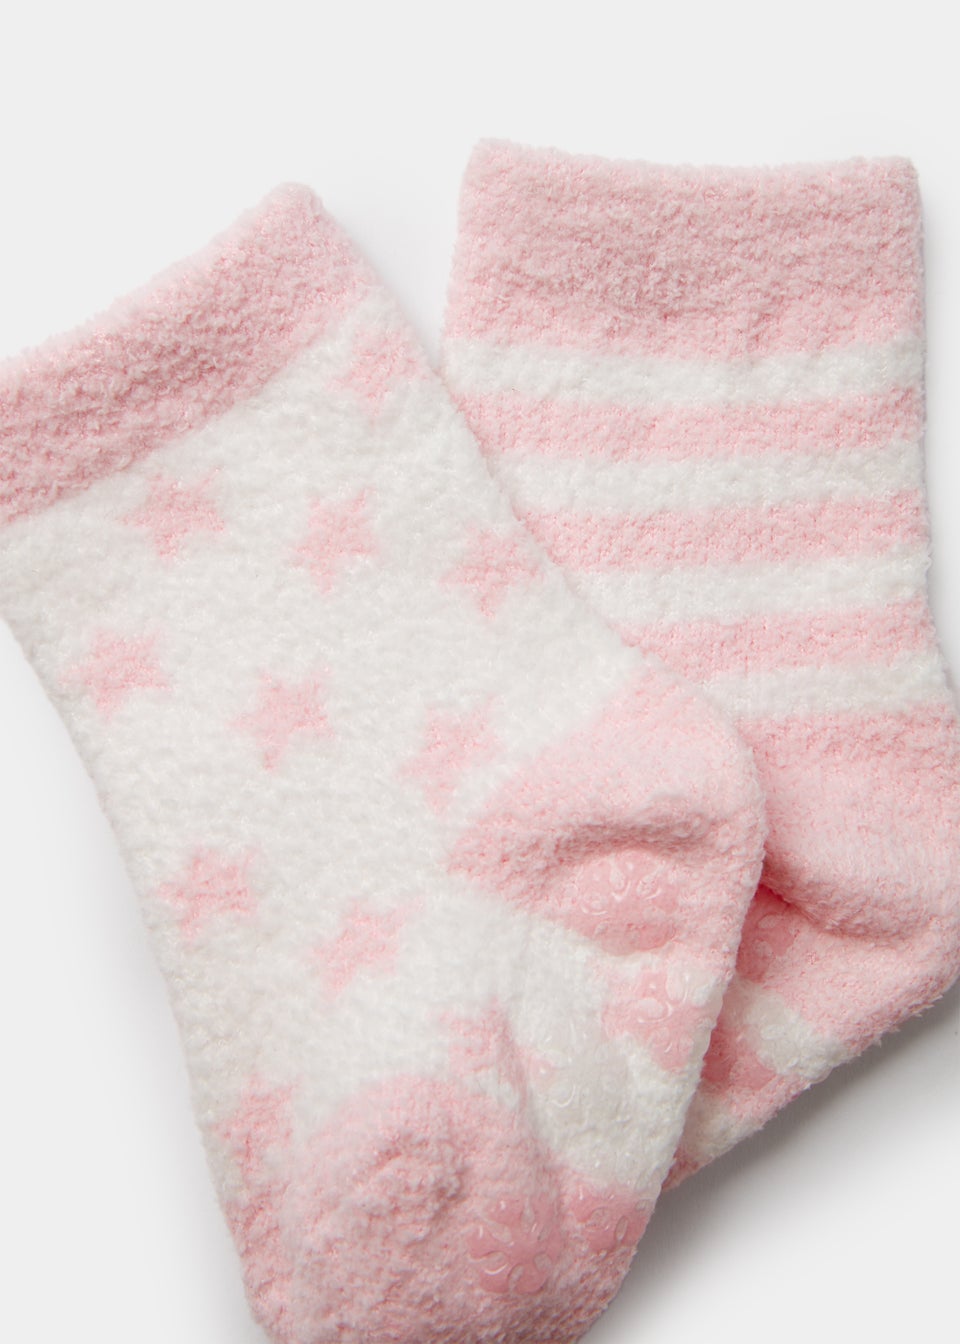 Pink Stripe & Star Cosy Baby Socks (Newborn-23mths)